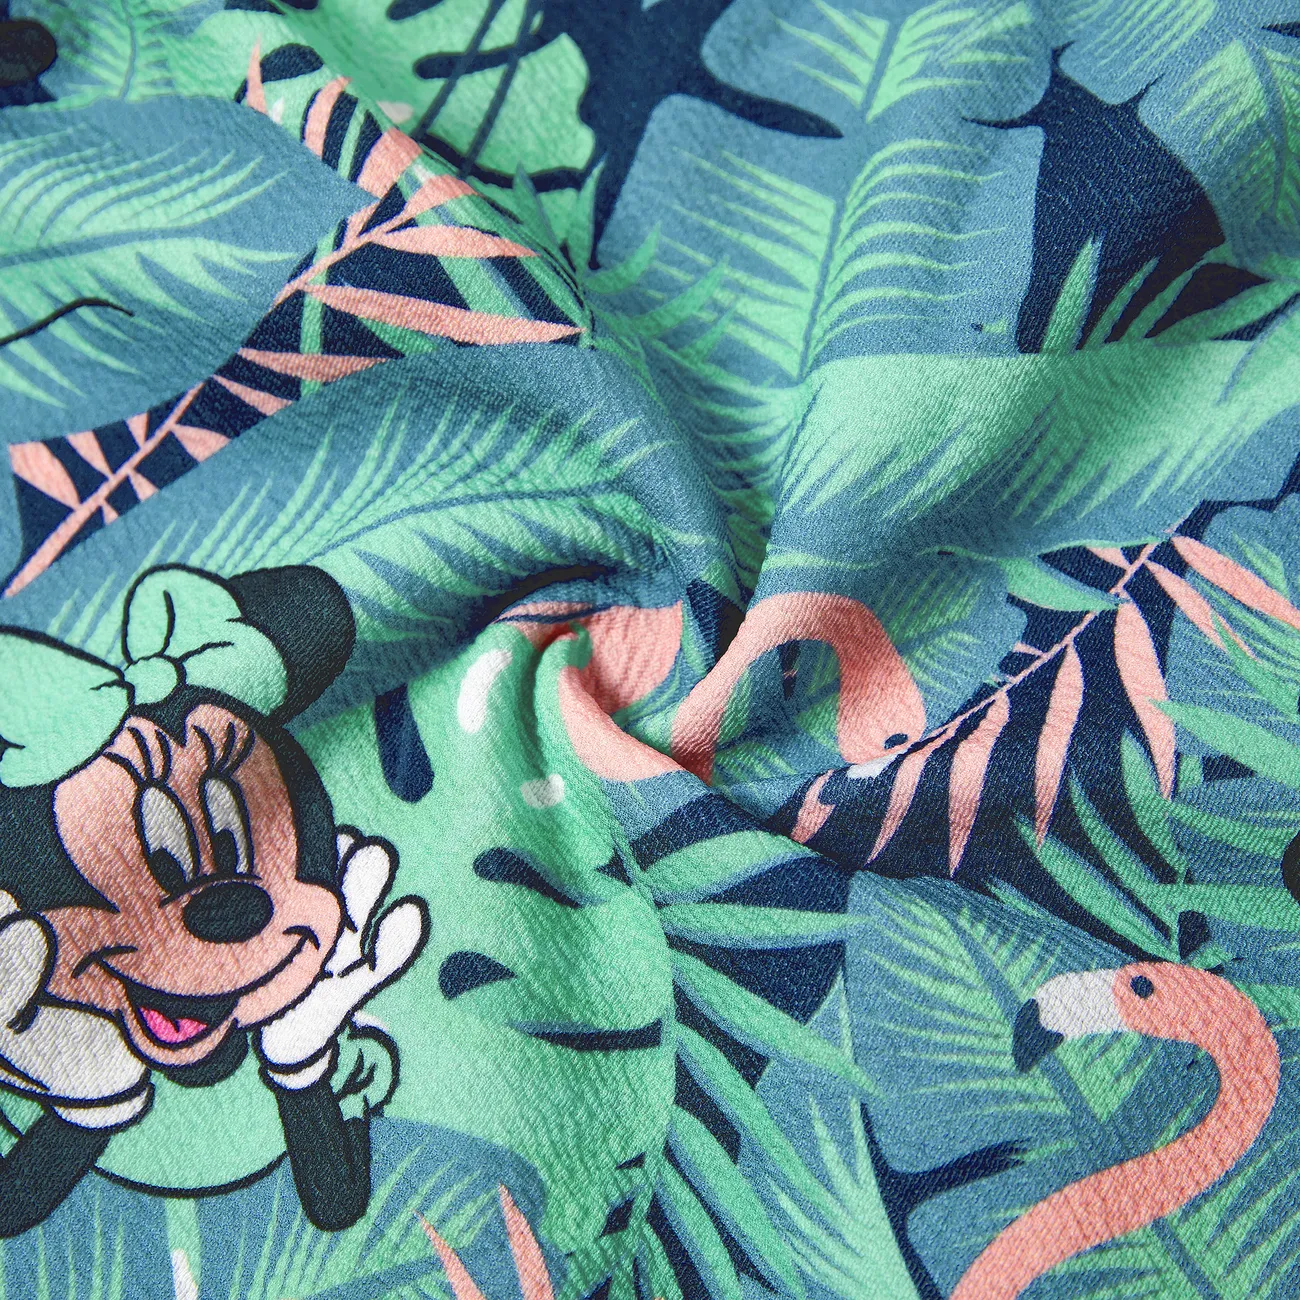 Disney Mickey and Friends 全家裝 熱帶植物花卉 短袖 親子裝 套裝 綠白 big image 1